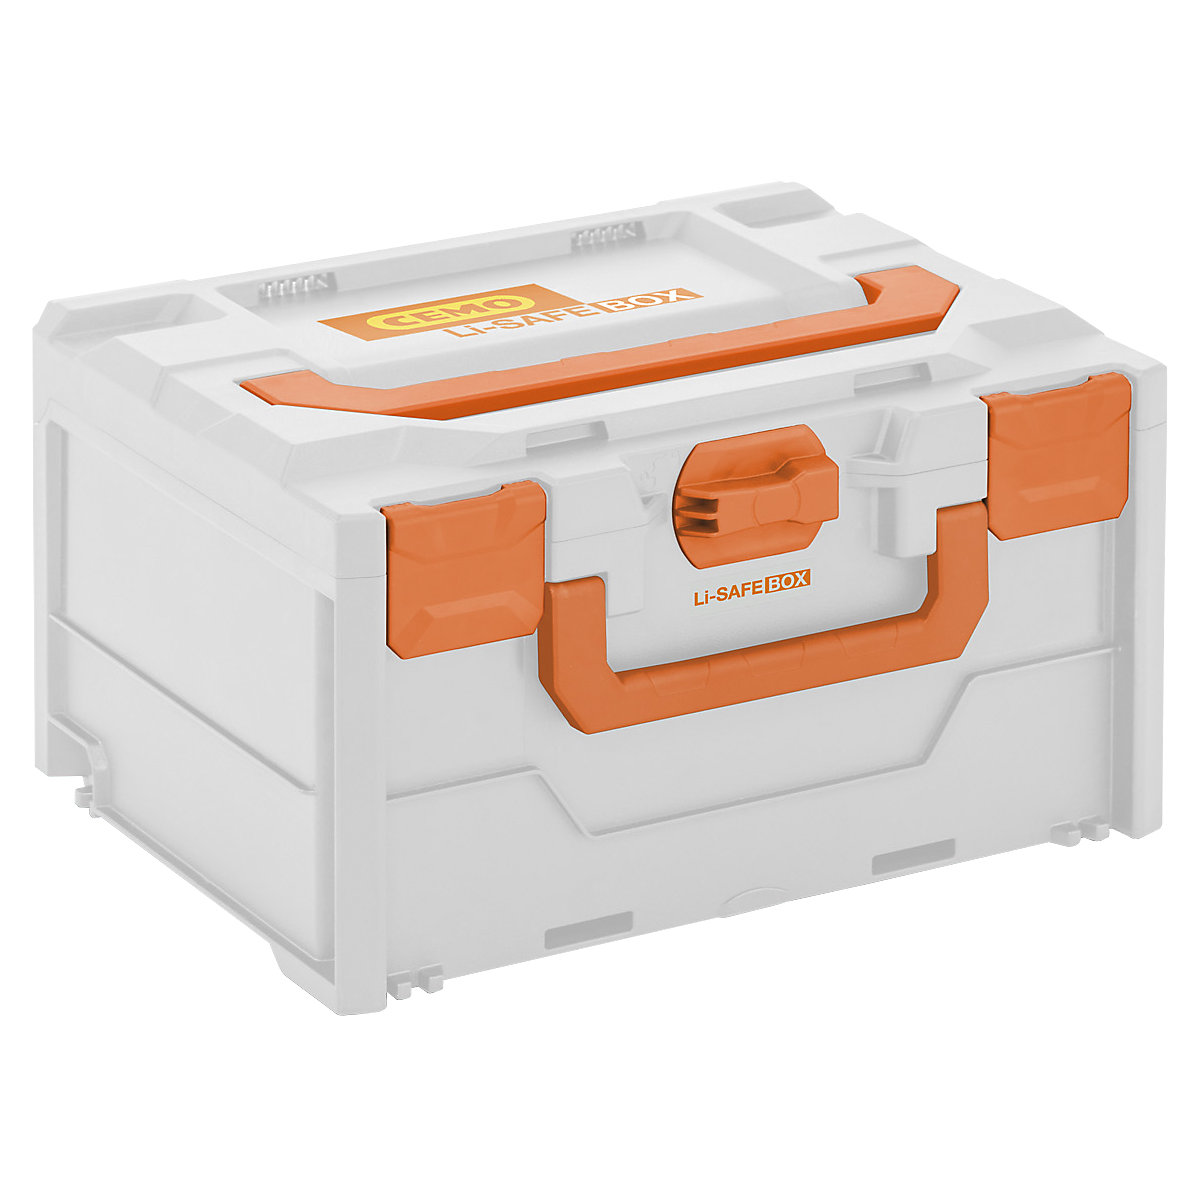 Systémový protipožární box na akumulátory Li-SAFE - CEMO